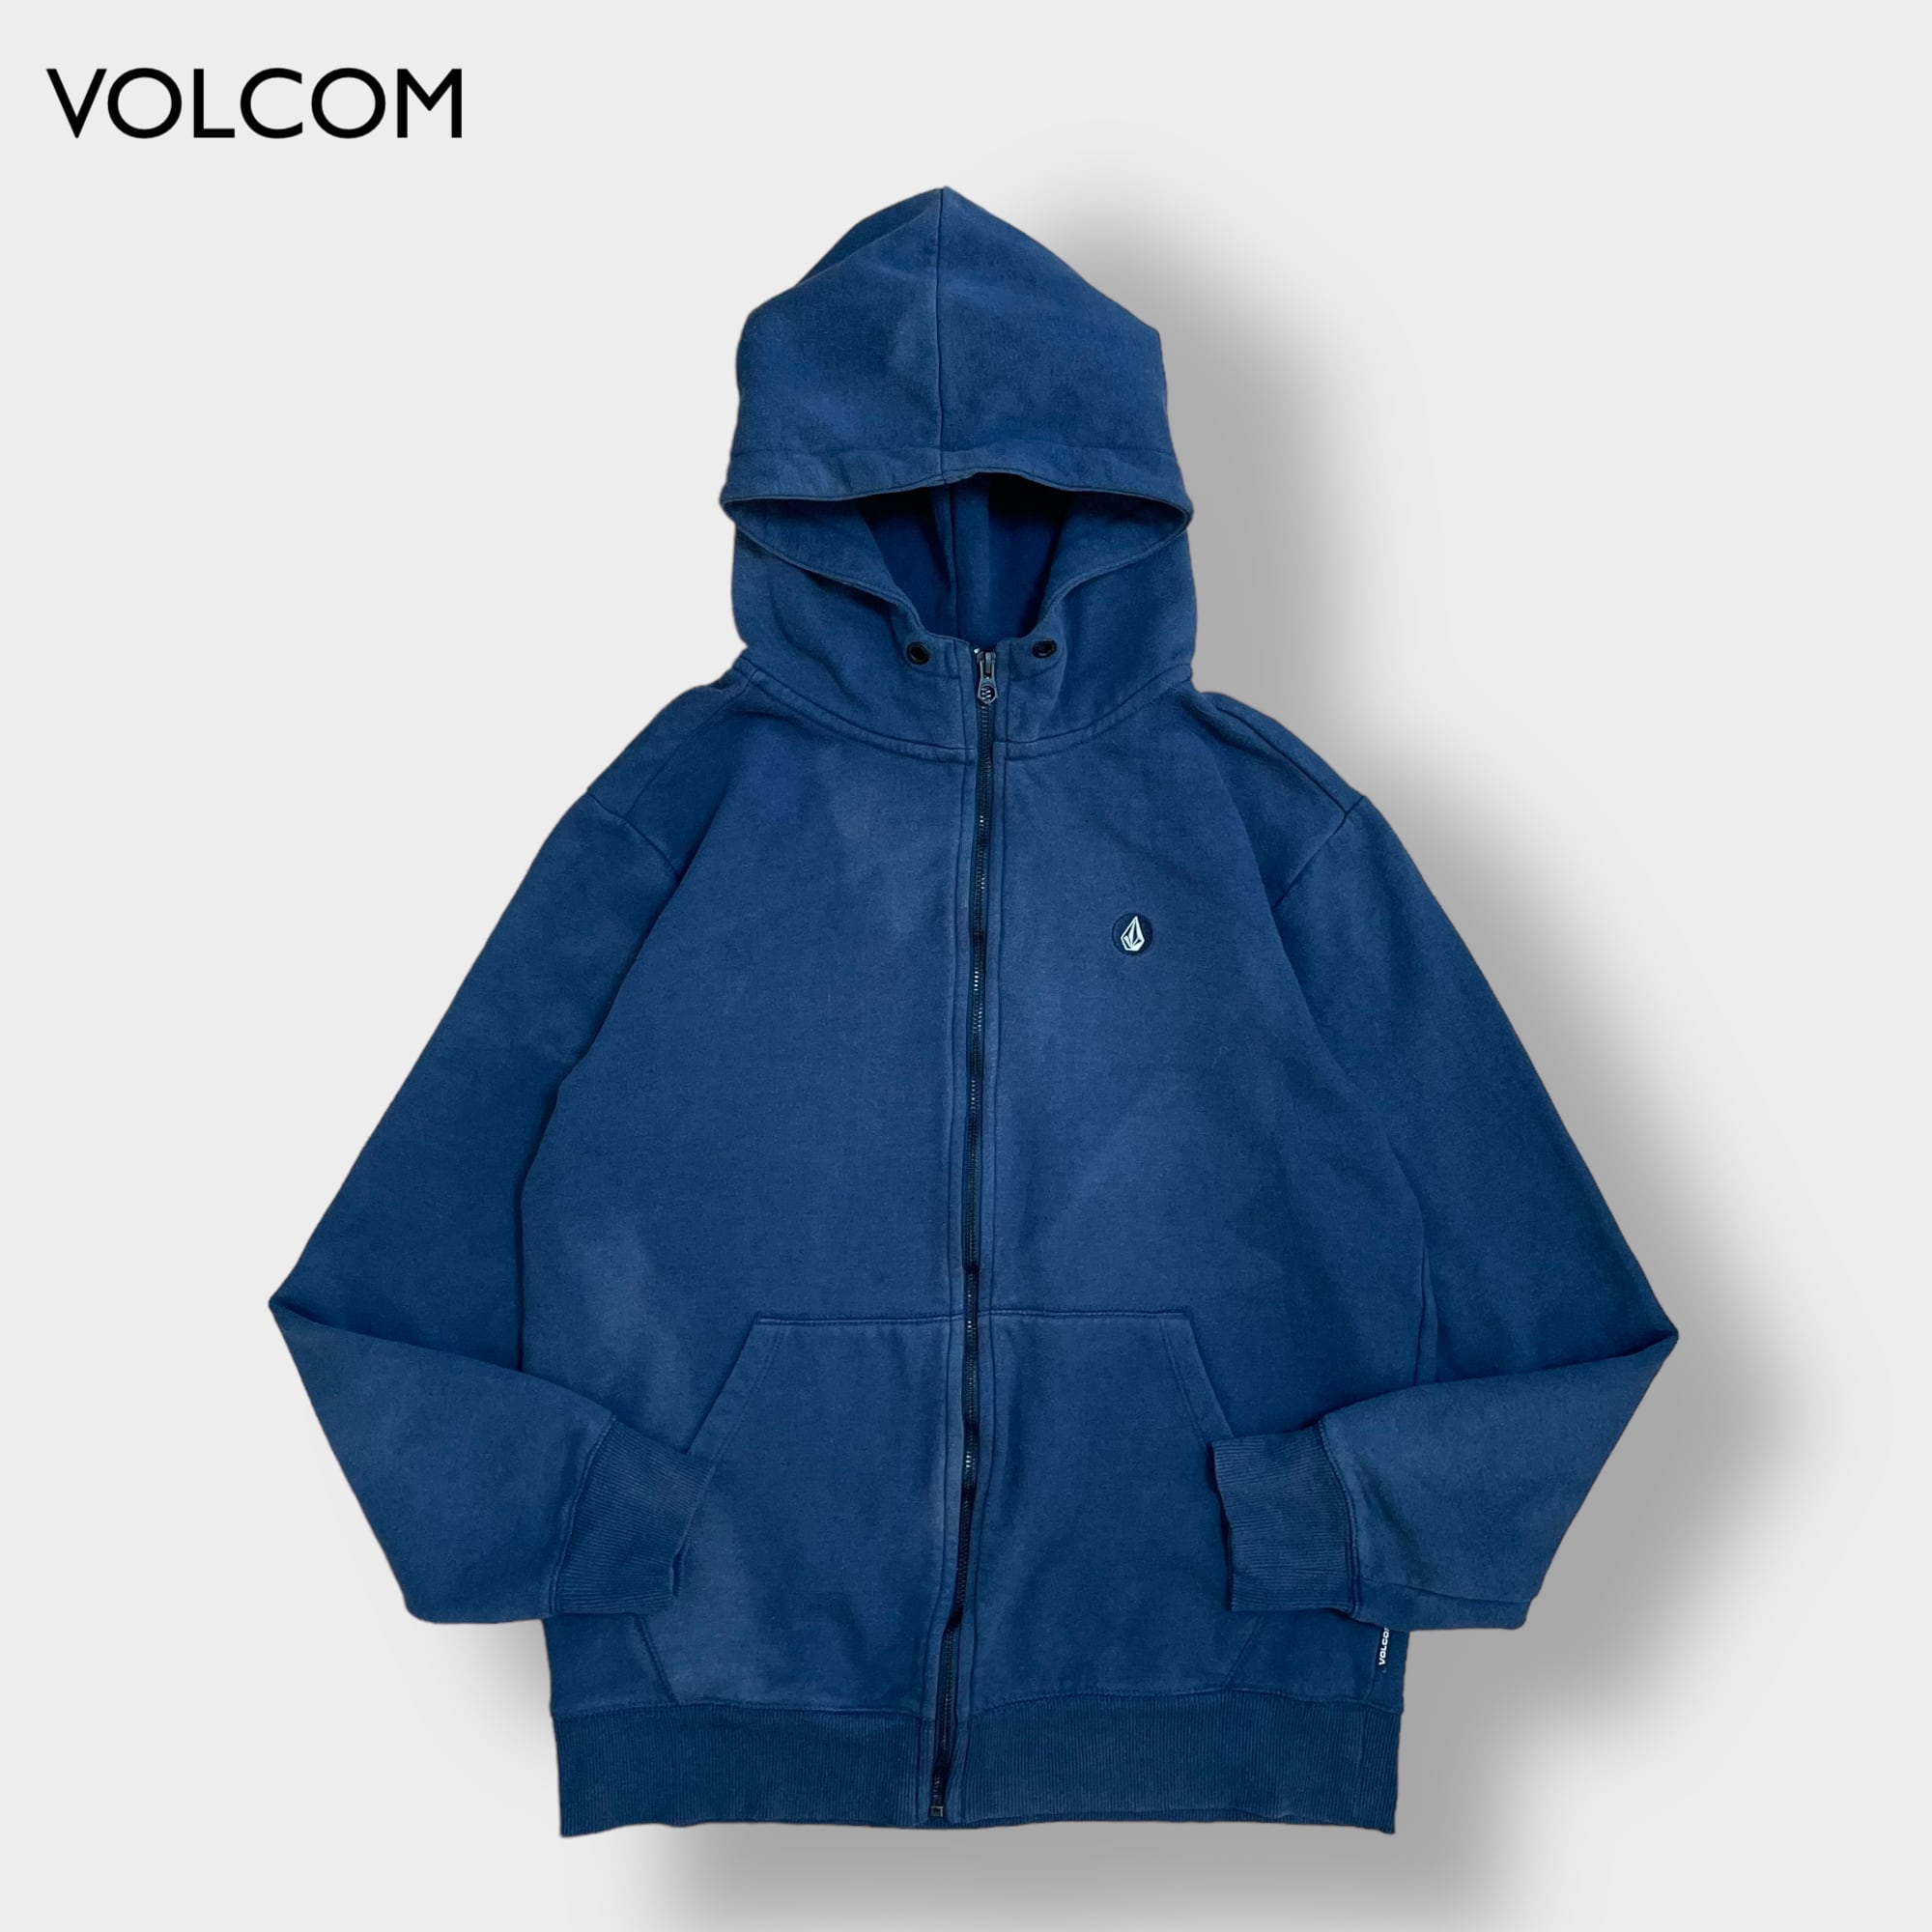 Volcom Hood Flannel JKT M 【春スキー用フーディ】